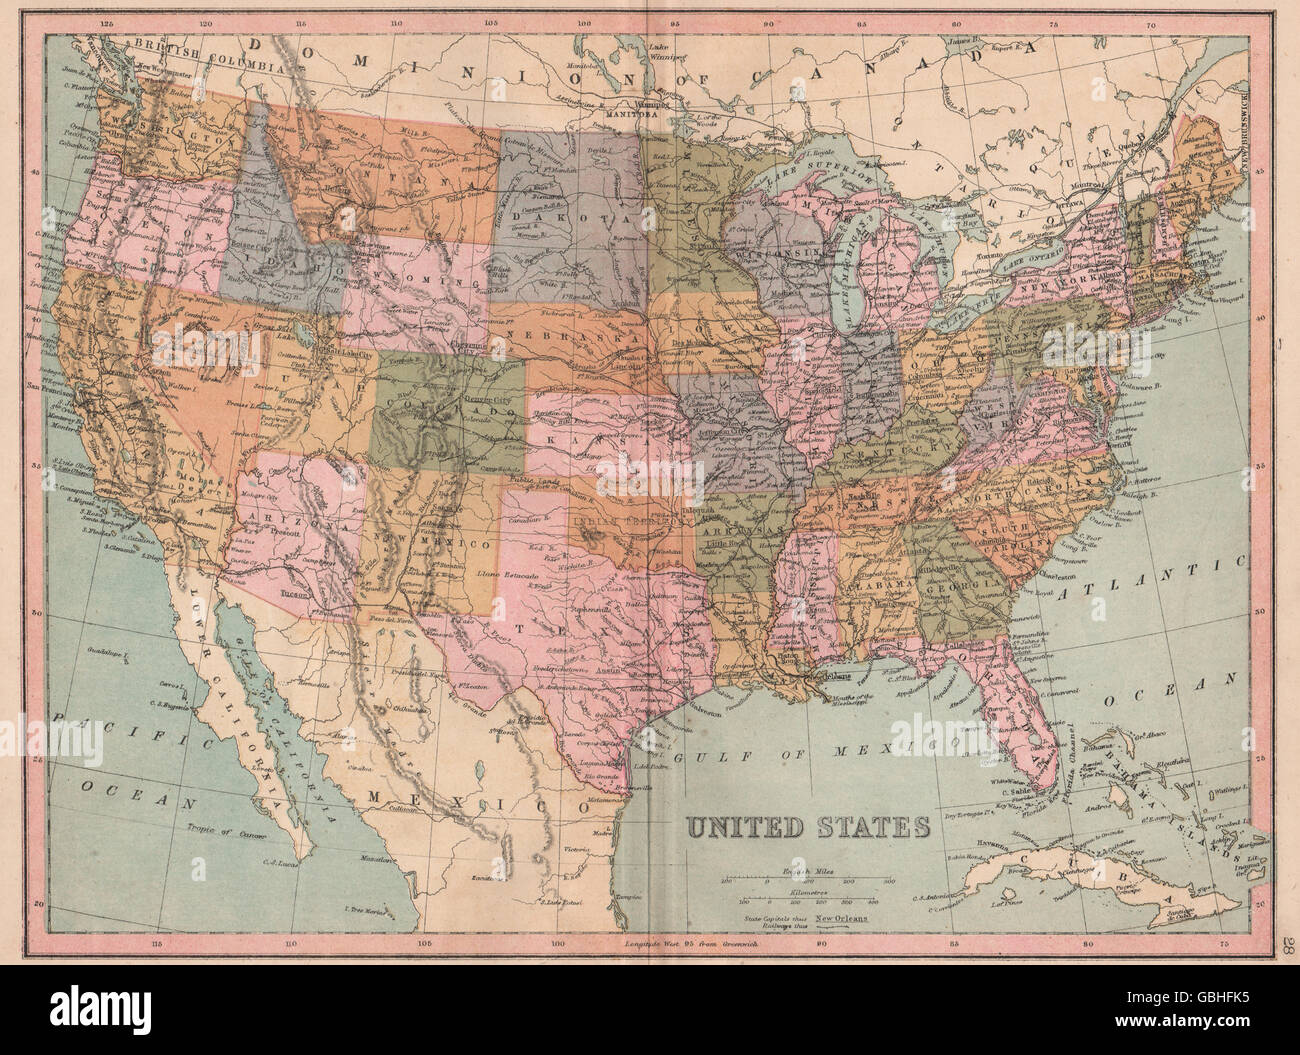 USA:Oklahoma shown as 'Indian Territory',Dakotas as one state.COLLINS, 1880 map Stock Photo